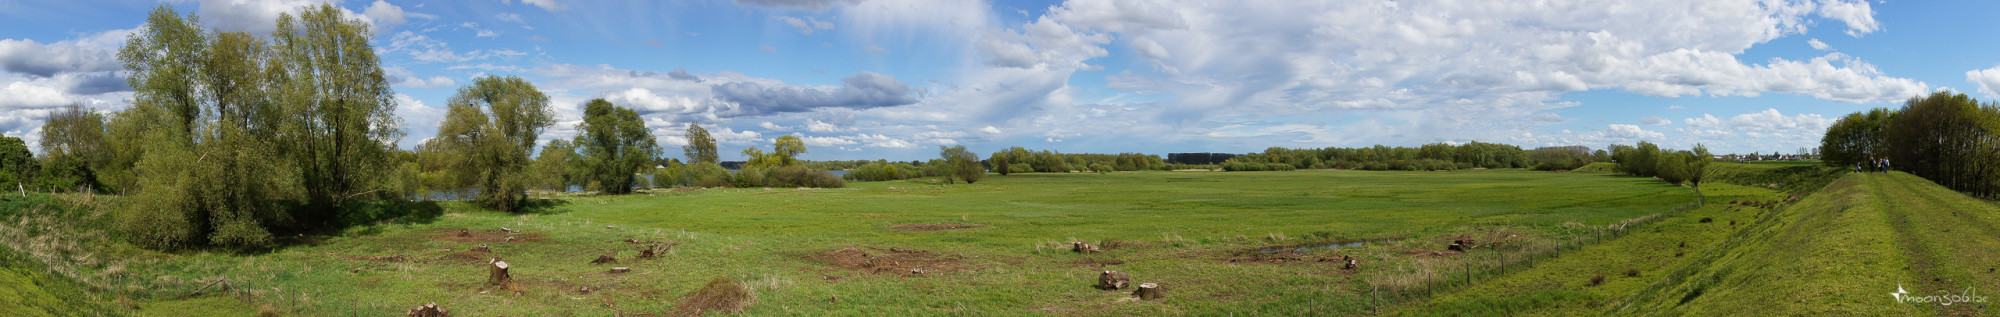 Schulensmeer field view